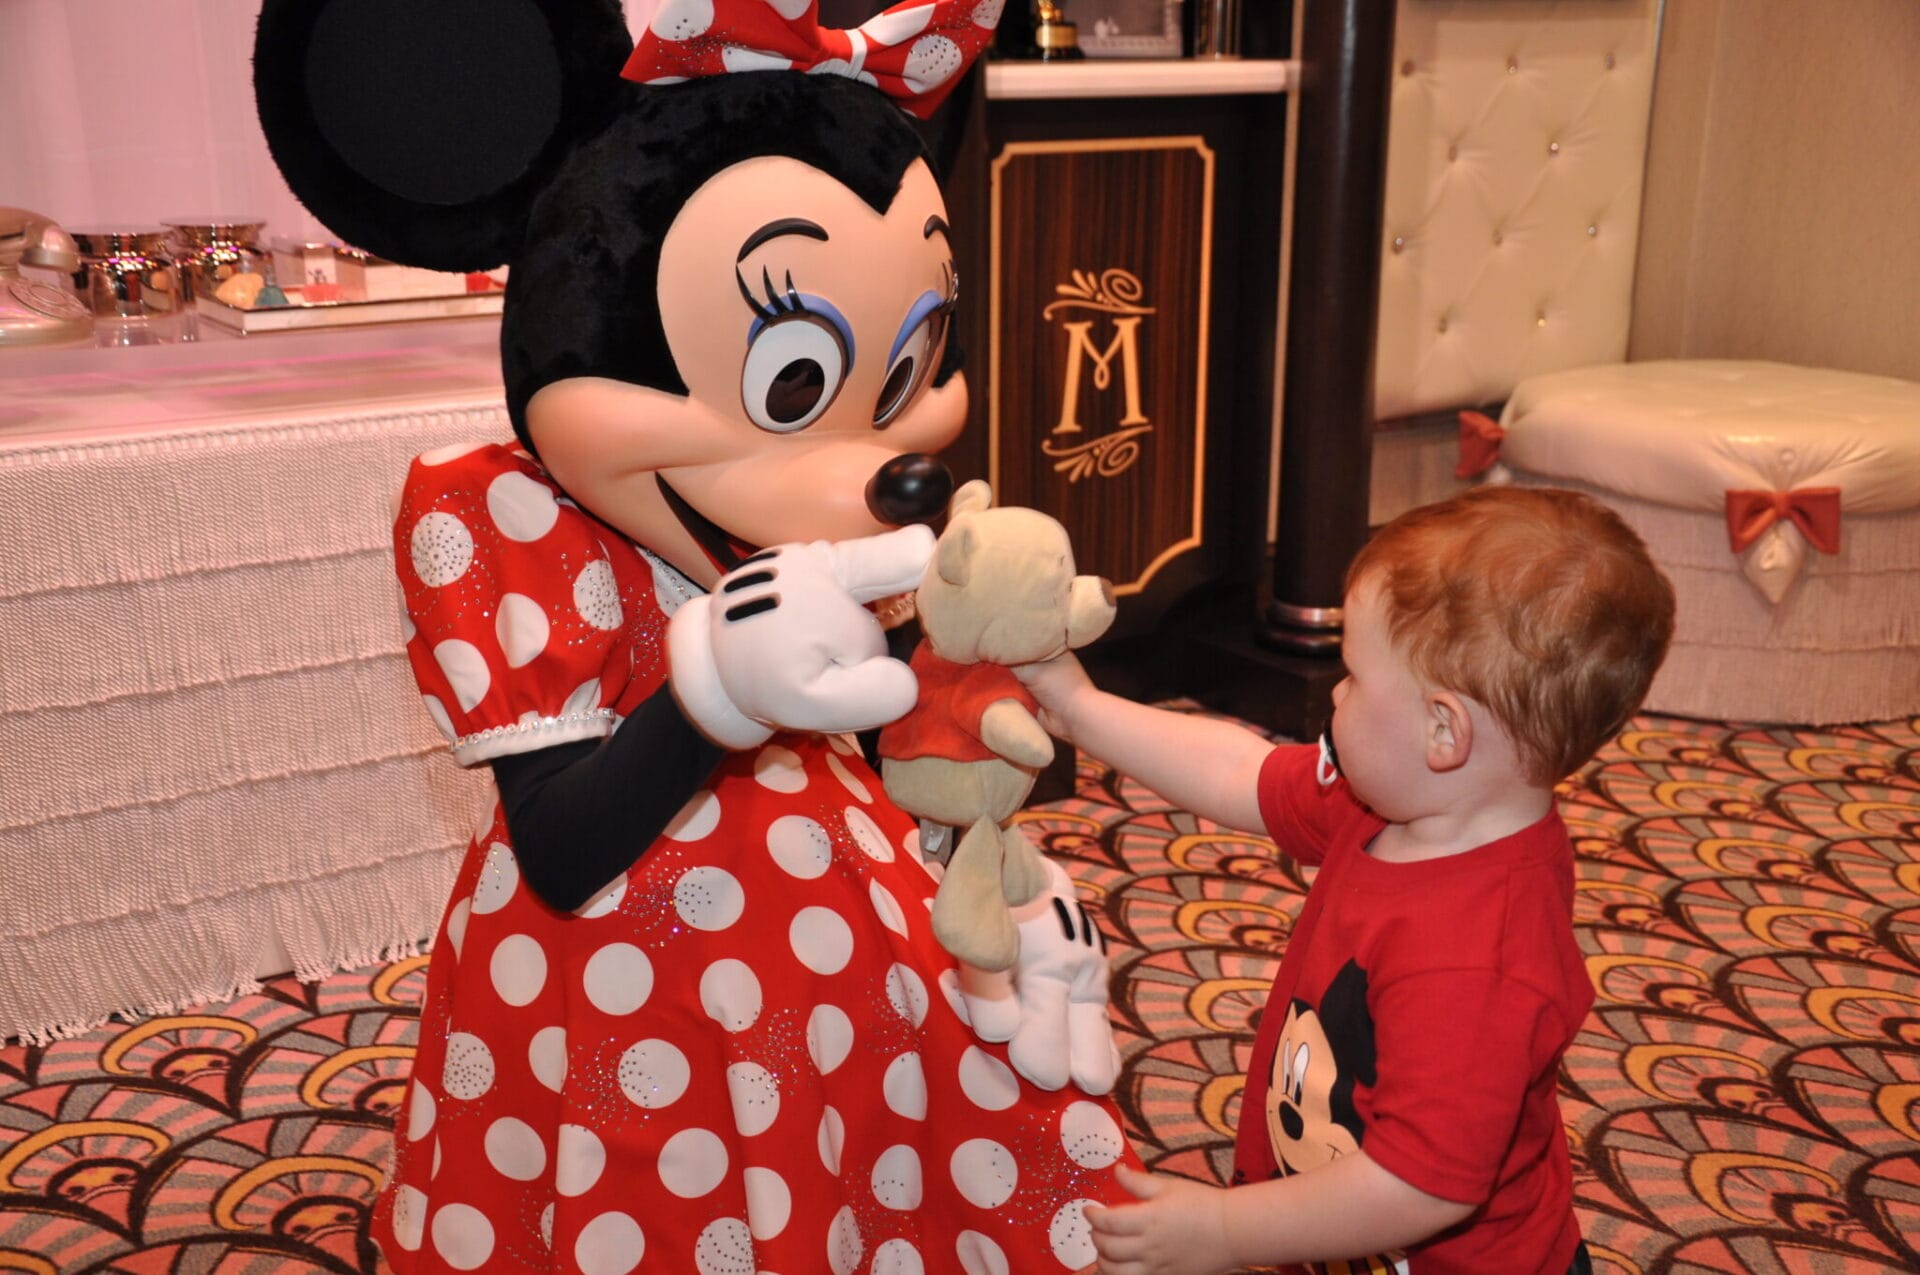 Toddler meeting Minnie Mouse at Walt Disney World